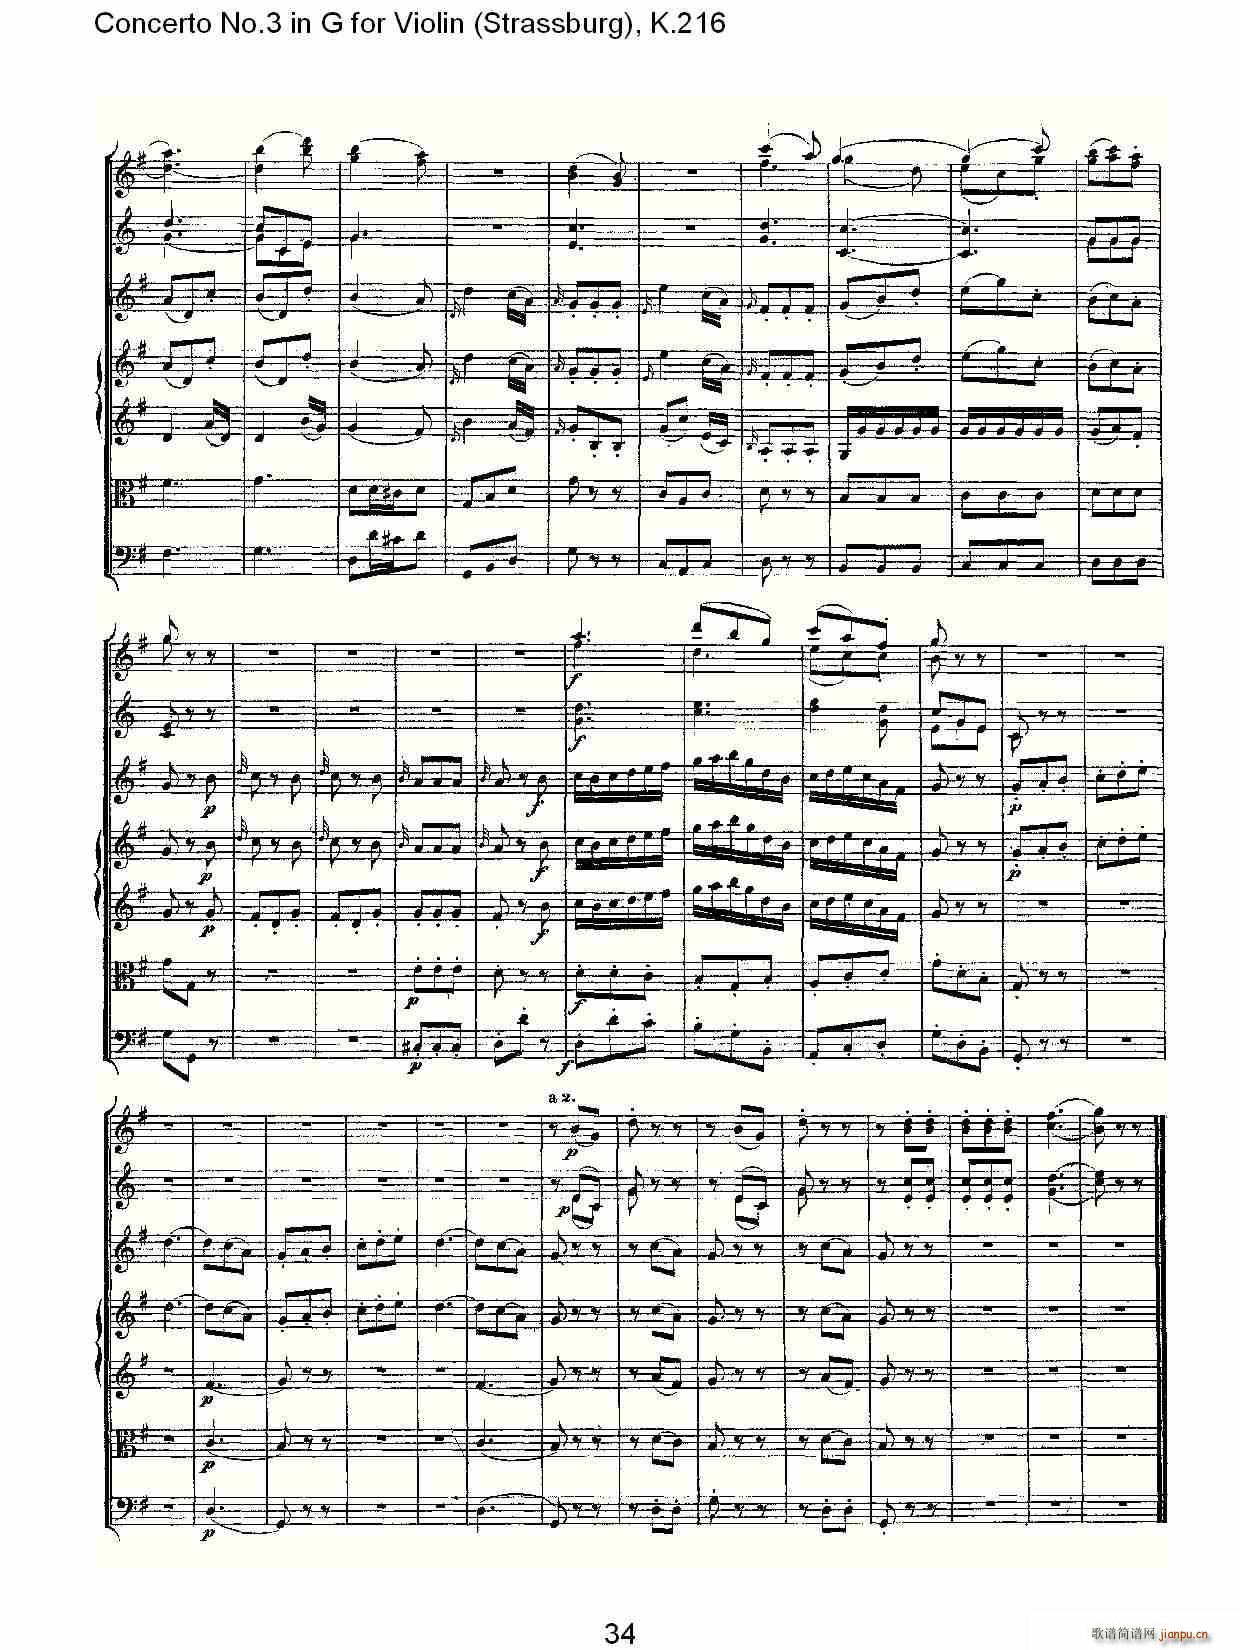 Concerto No.3 in G for Violin K.216(С)34